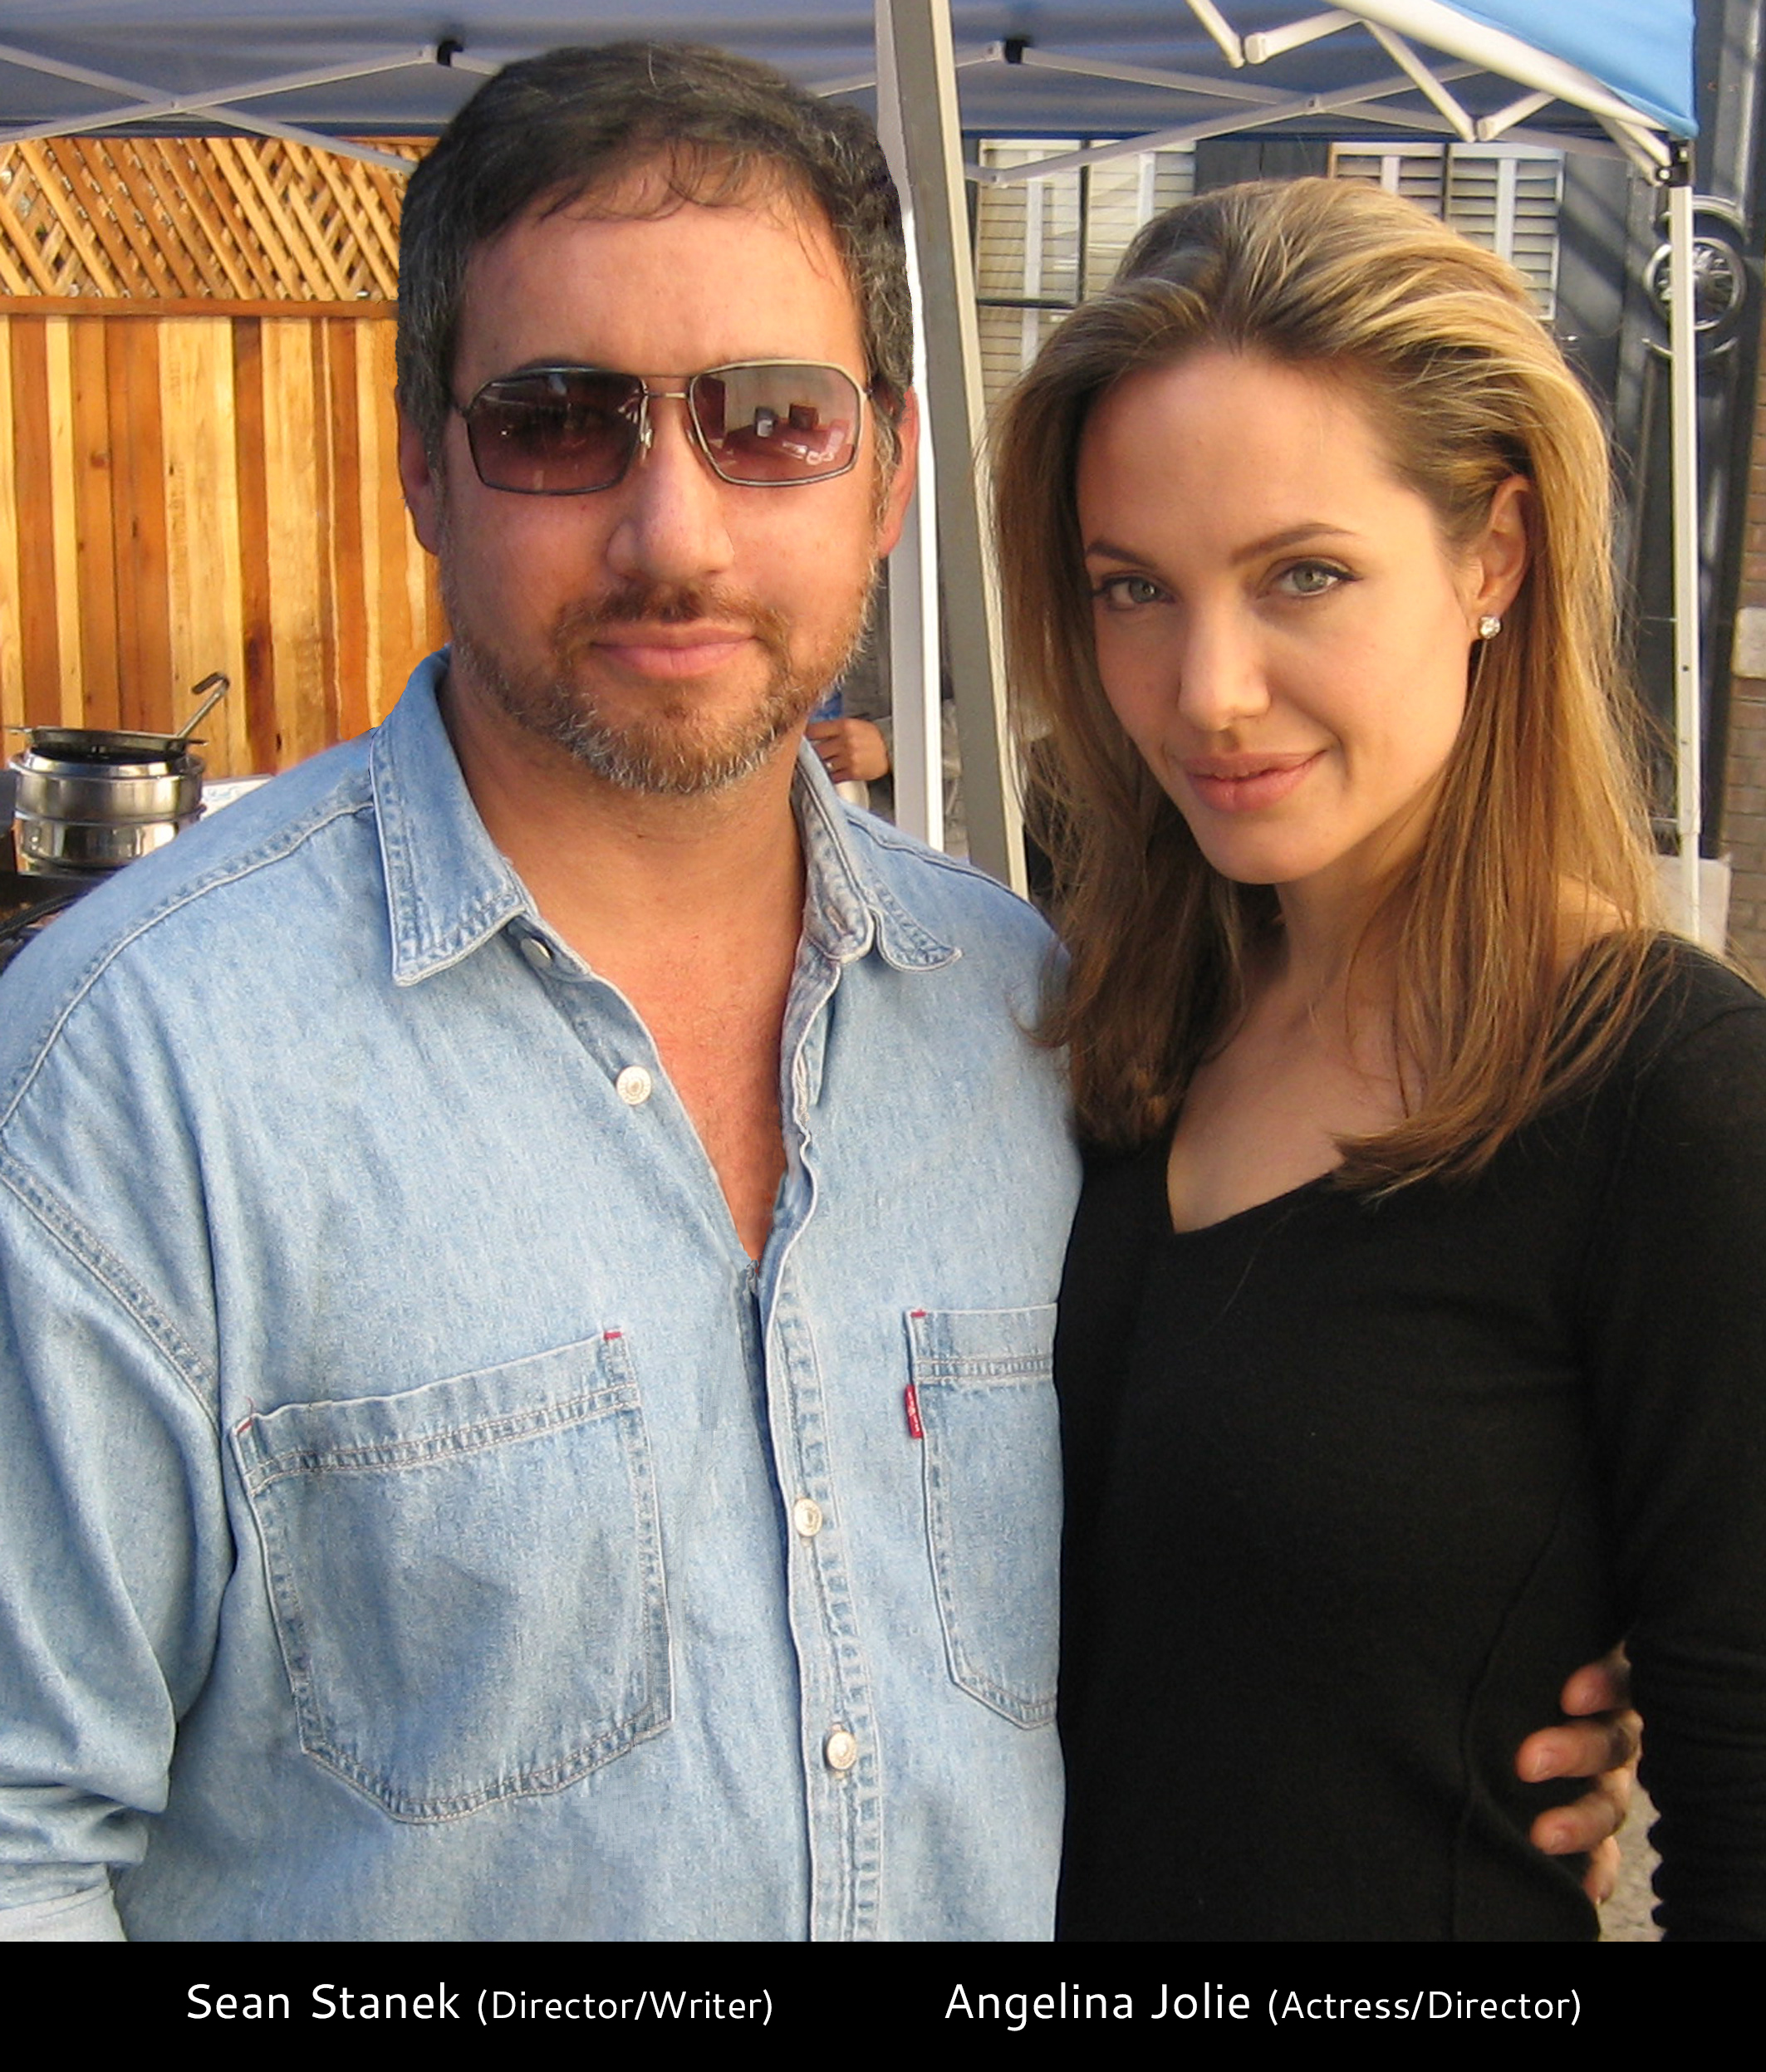 Angelina Jolie and Sean Stanek